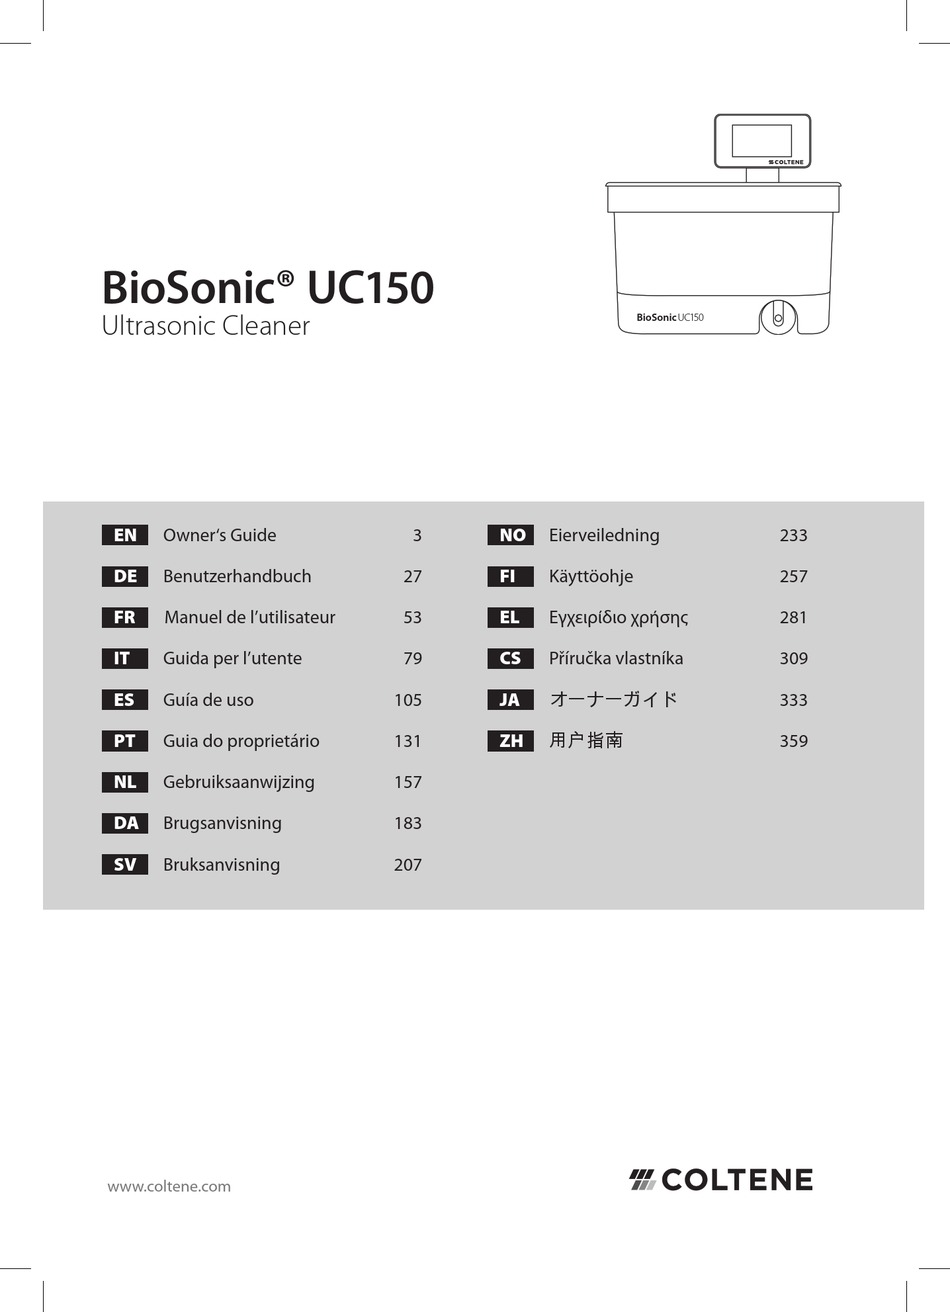 COLTENE BIOSONIC UC150 OWNER'S MANUAL Pdf Download | ManualsLib